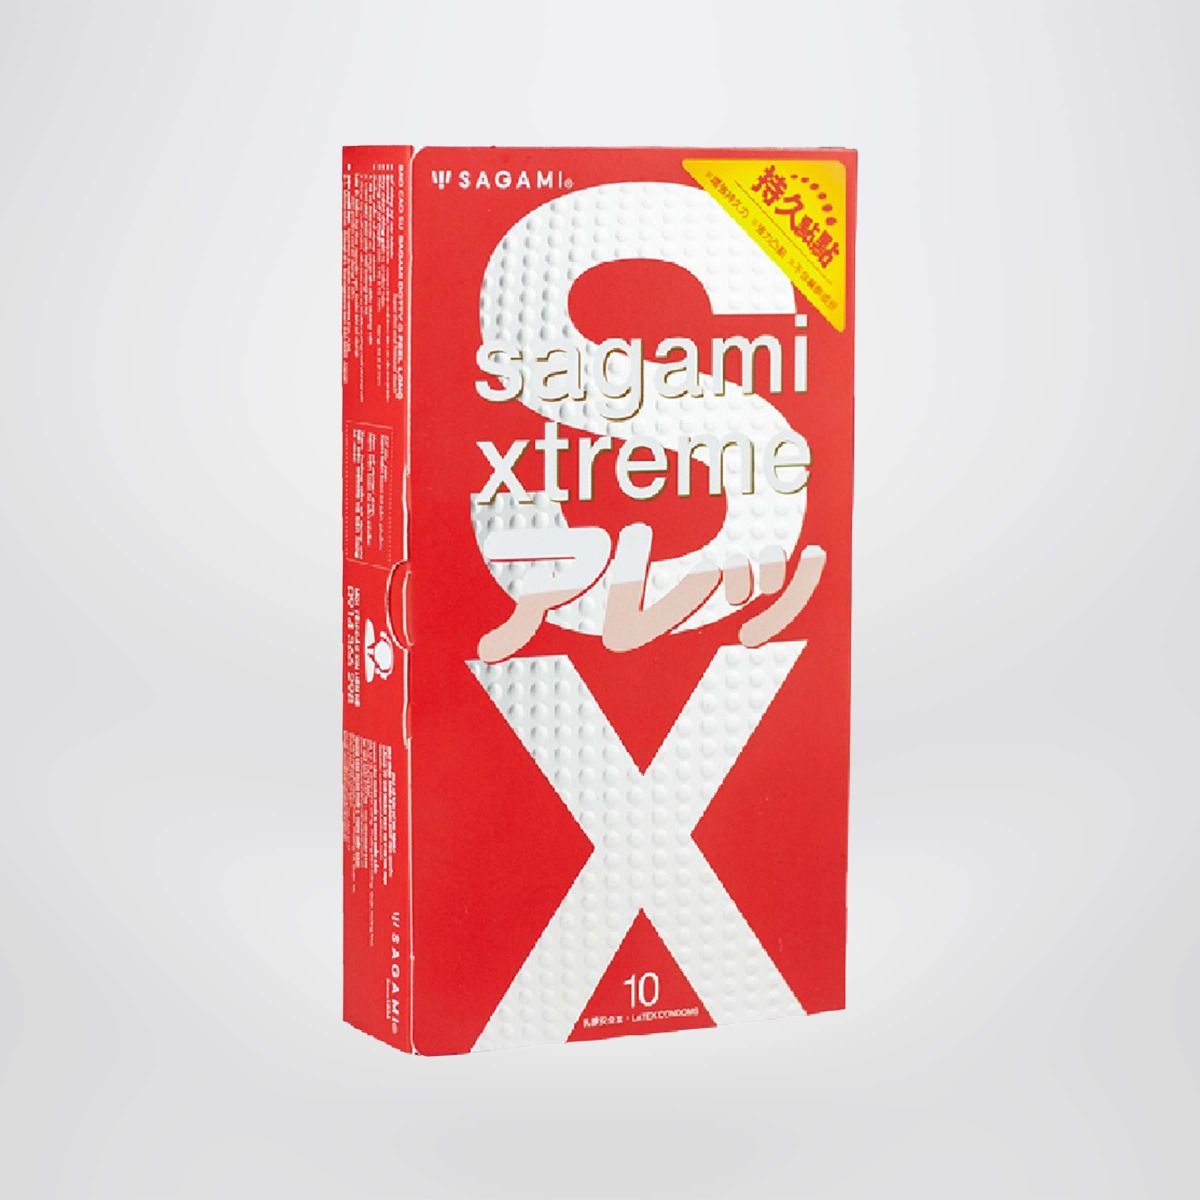 Bao cao su Sagami Xtreme Feel Long (Hộp 10) - Bao cao su nam có gai nổi